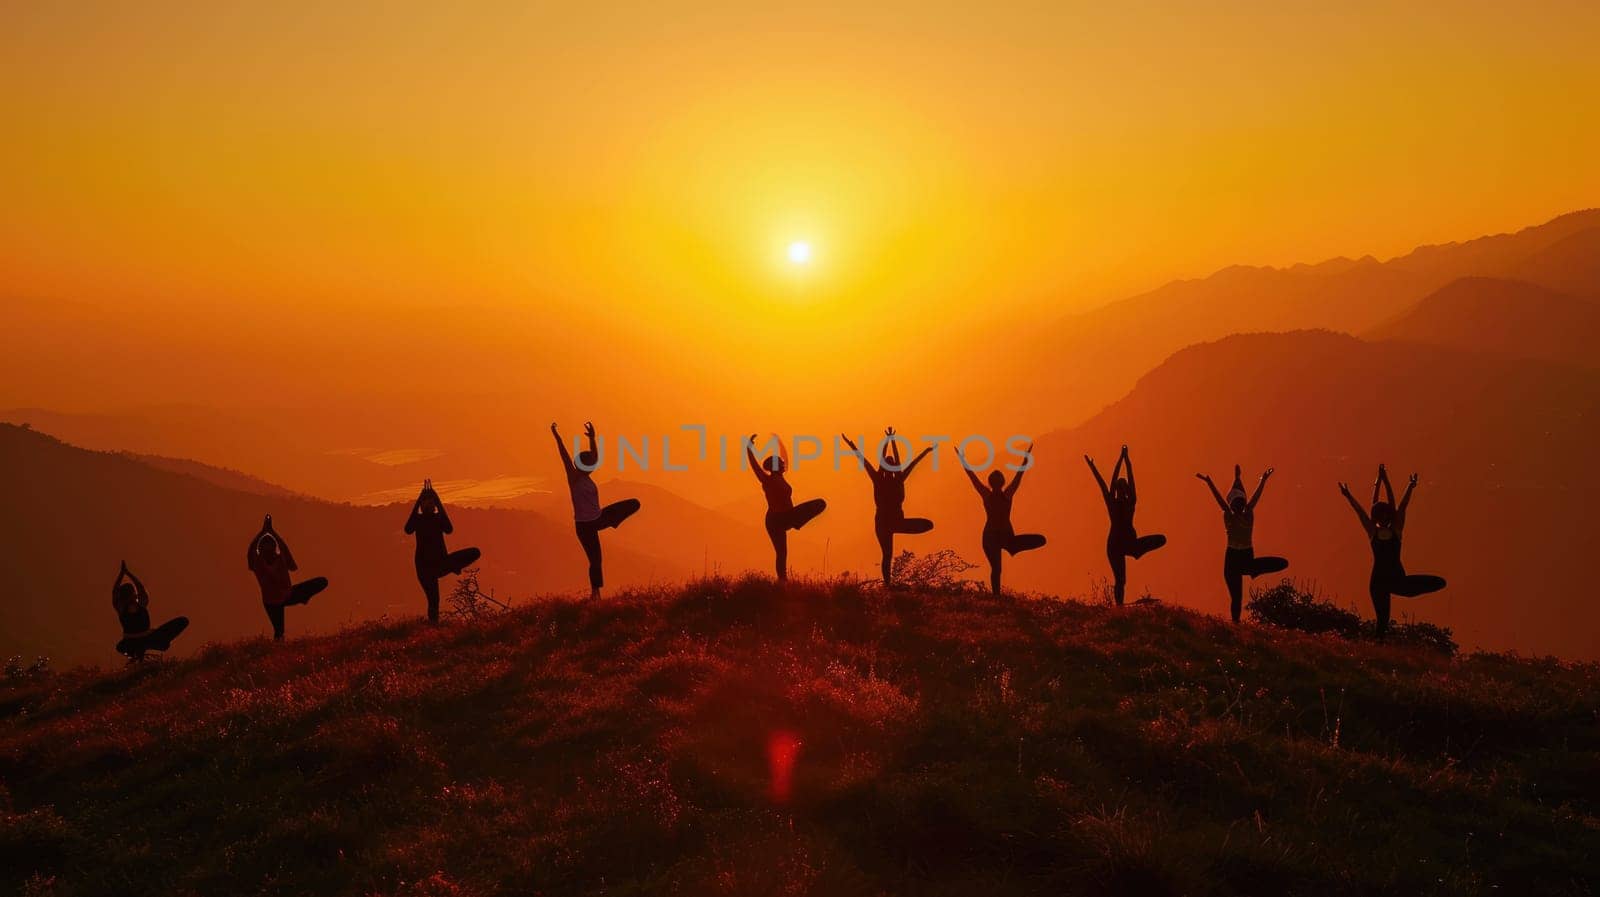 Sunrise Yoga Session on Mountain Peak. Resplendent. by biancoblue